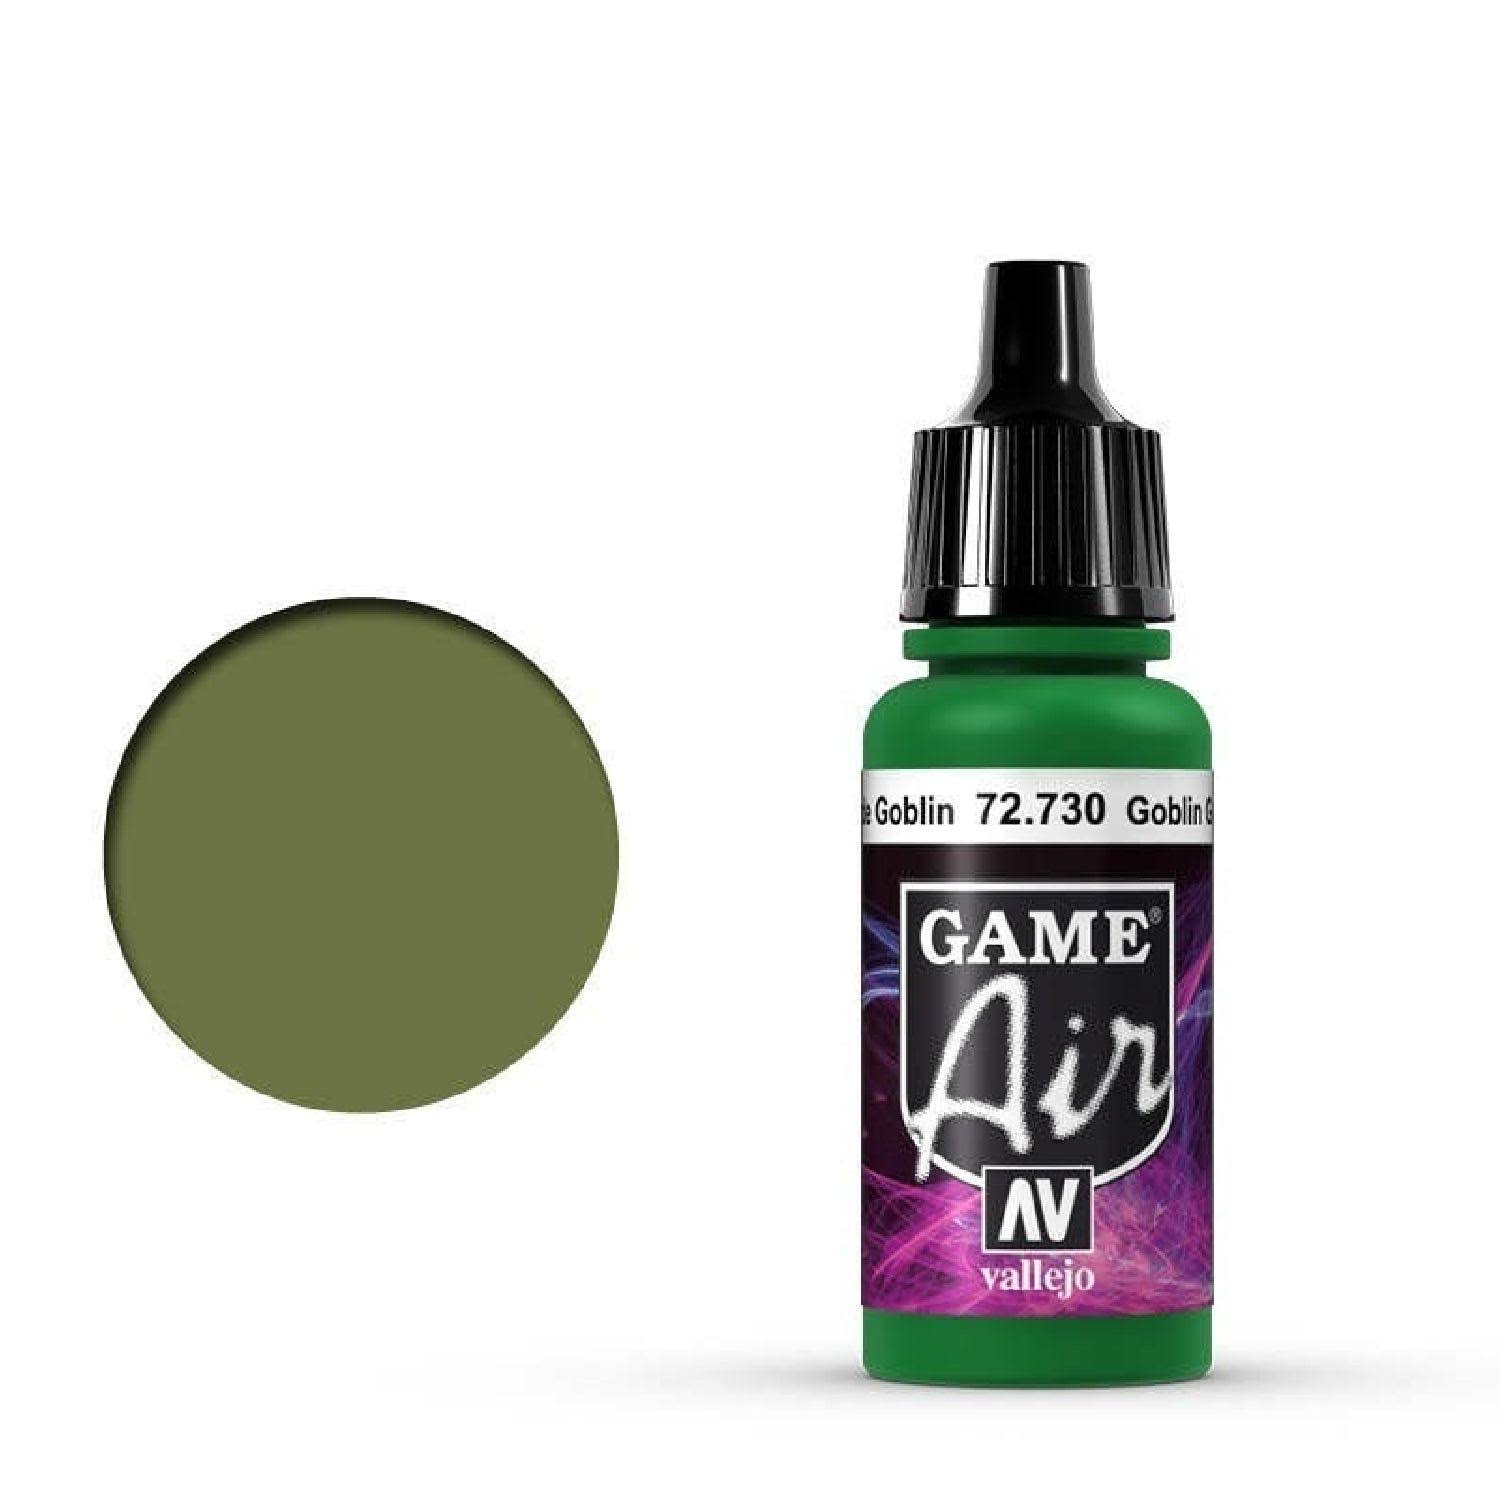 Vallejo Game Air Paint - #72.730 Goblin Green, 17ml